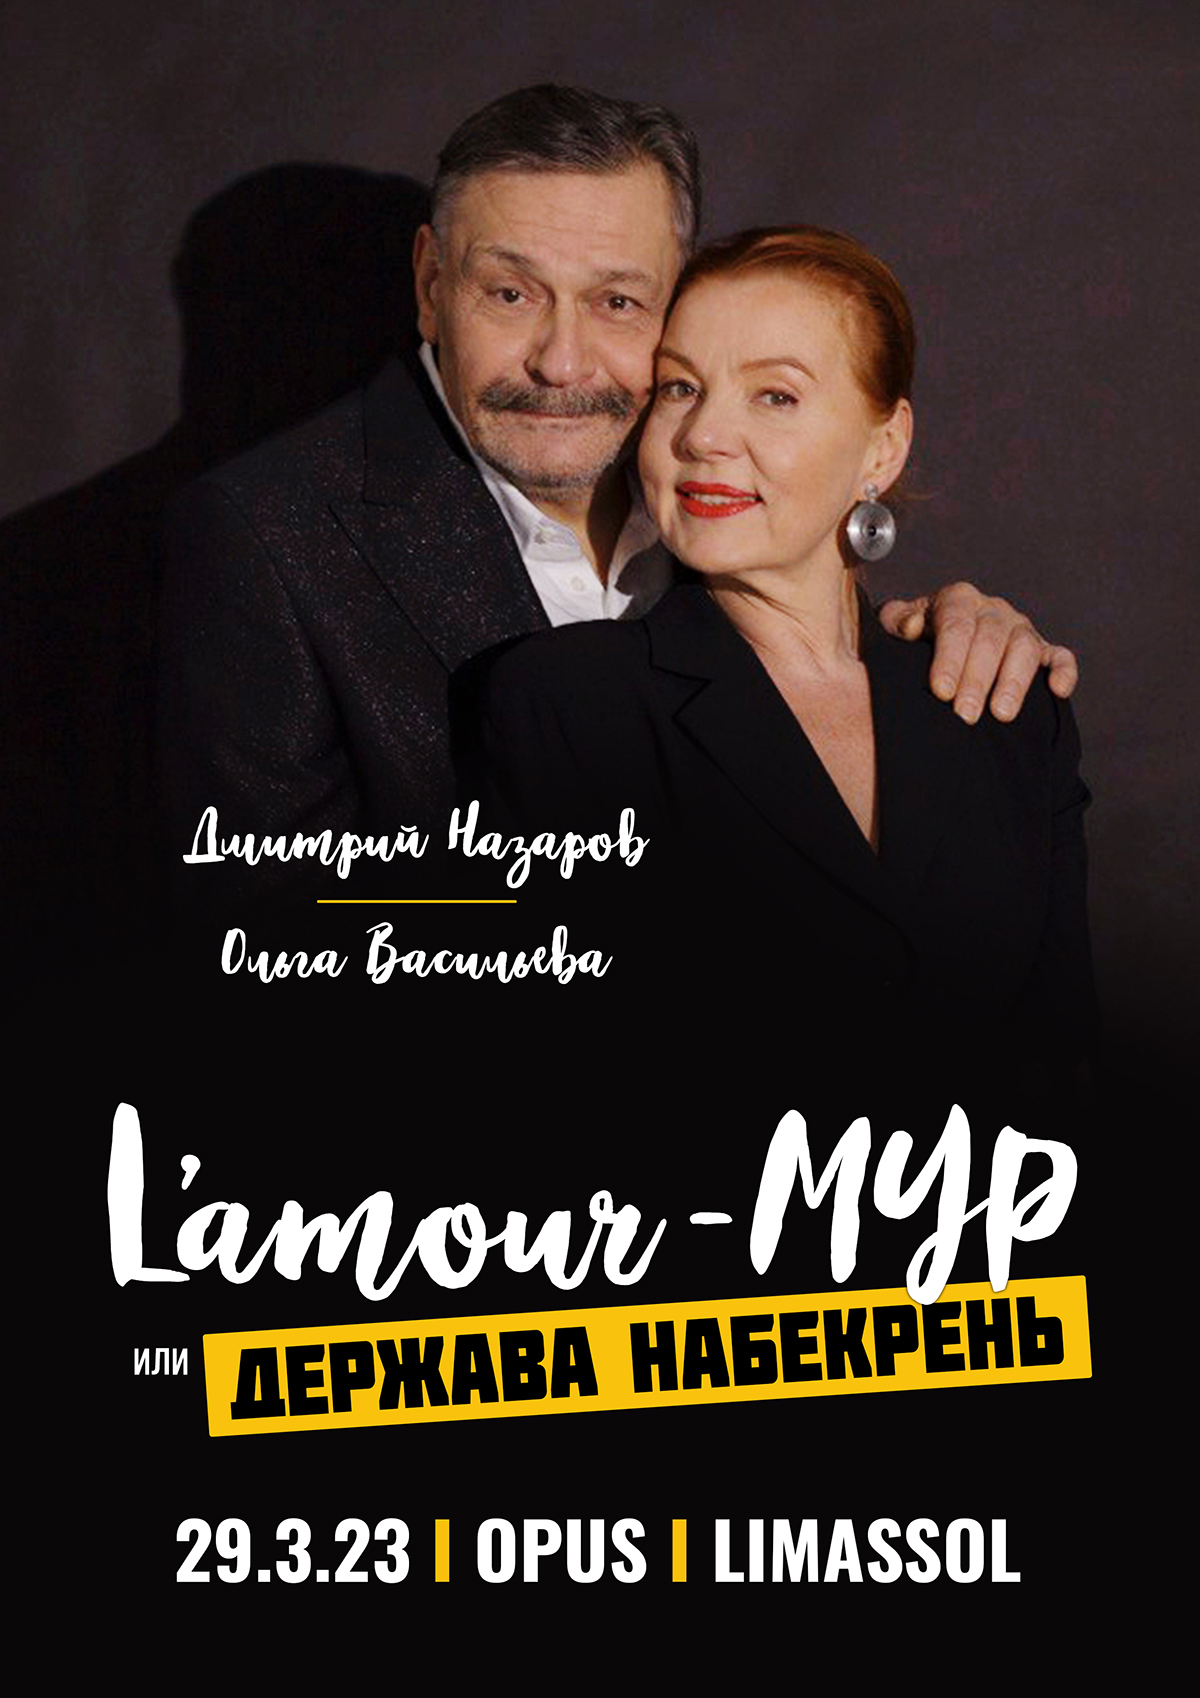 DMITRY NAZAROV AND OLGA VASILIEVA: L’AMOUR-MUR